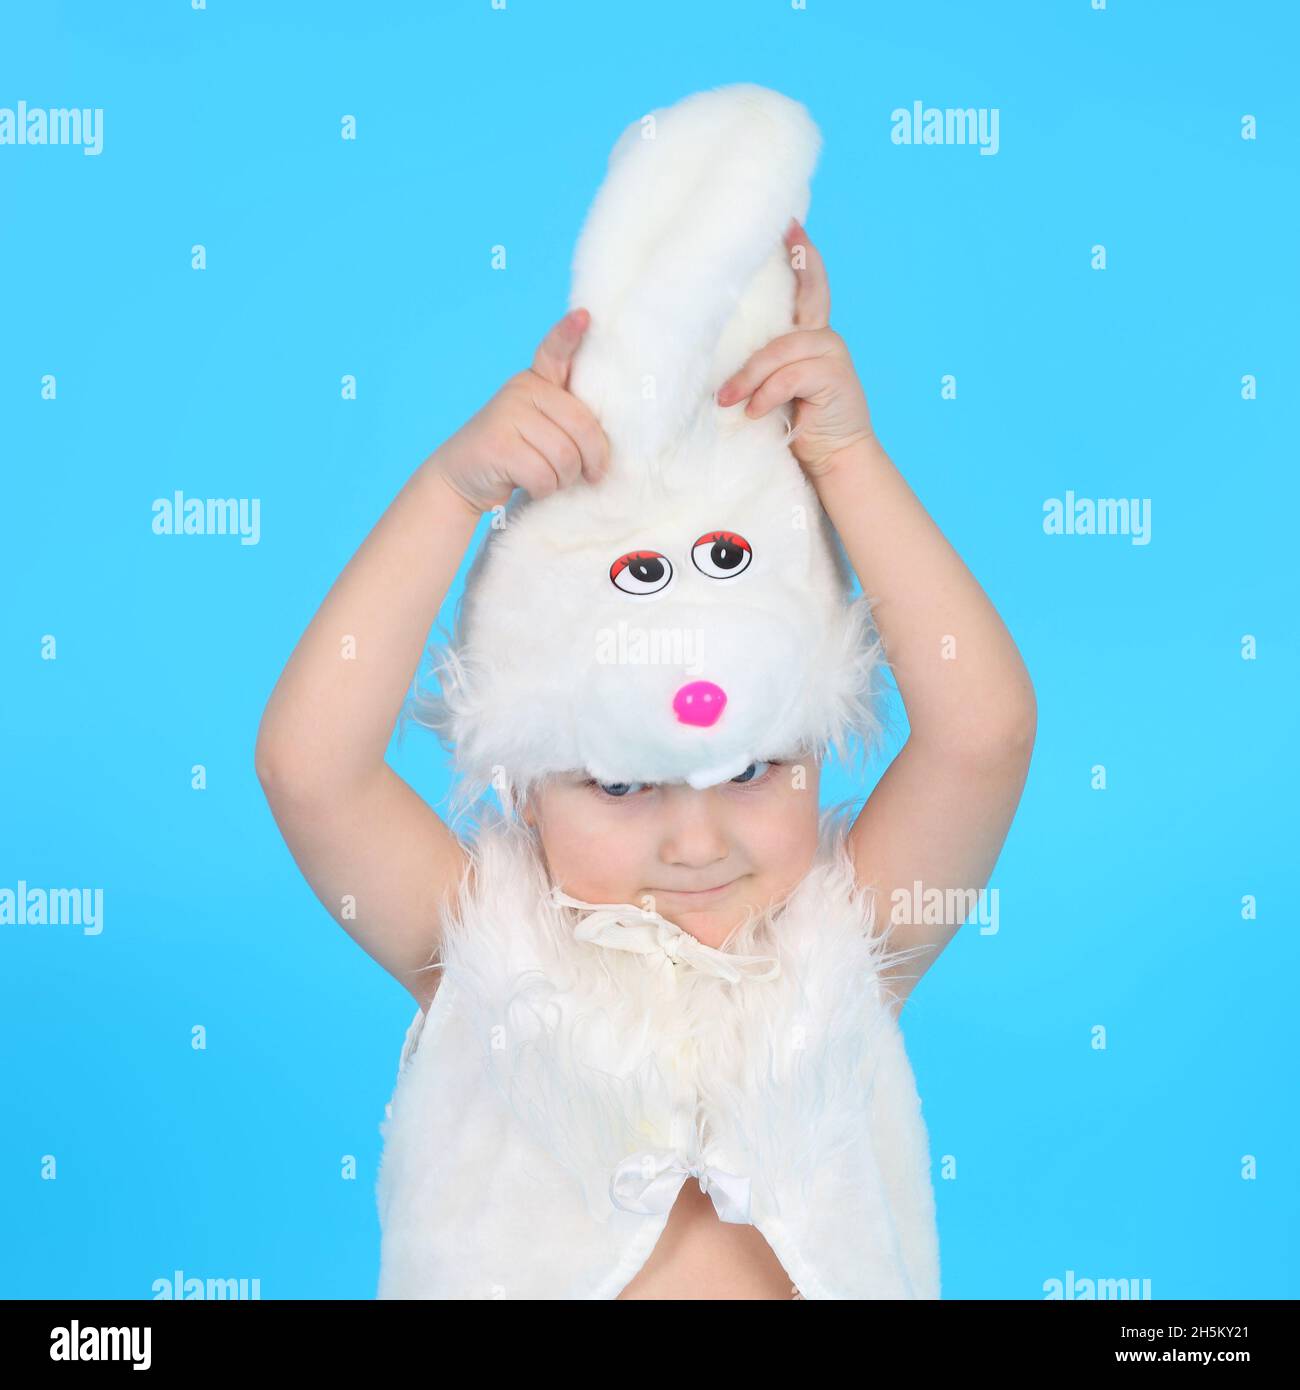 cute little child in the rabbit costume Stock Photo